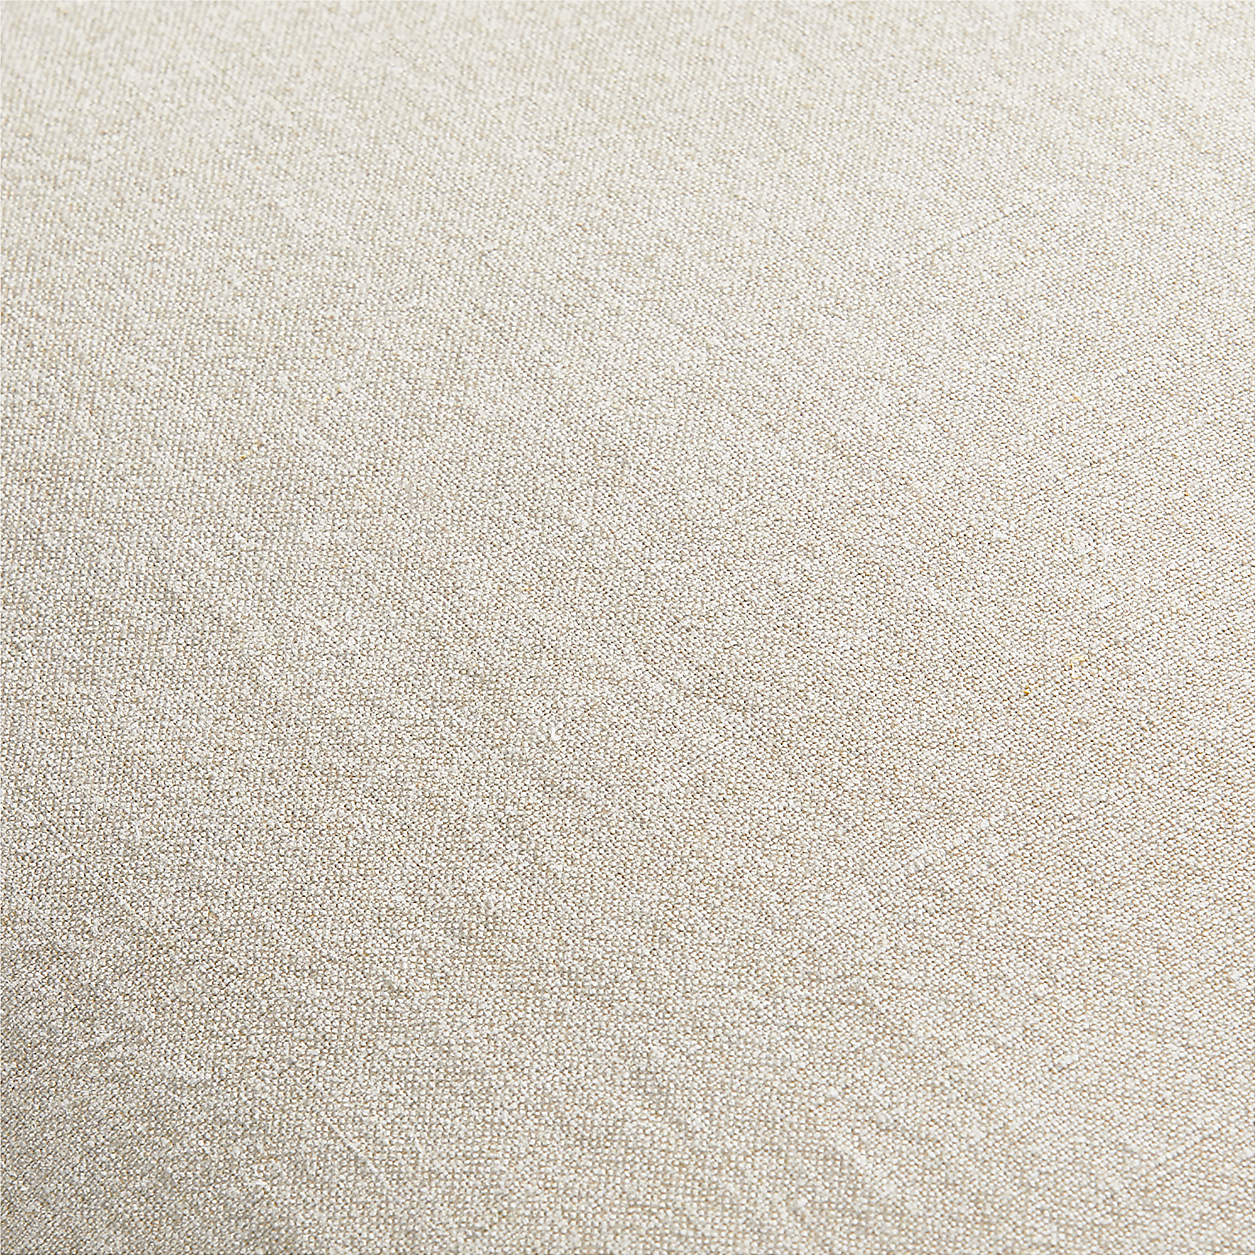 Amalfi Cotton Linen Scallop Edge 23"x23" Arctic Ivory Throw Pillow Cover